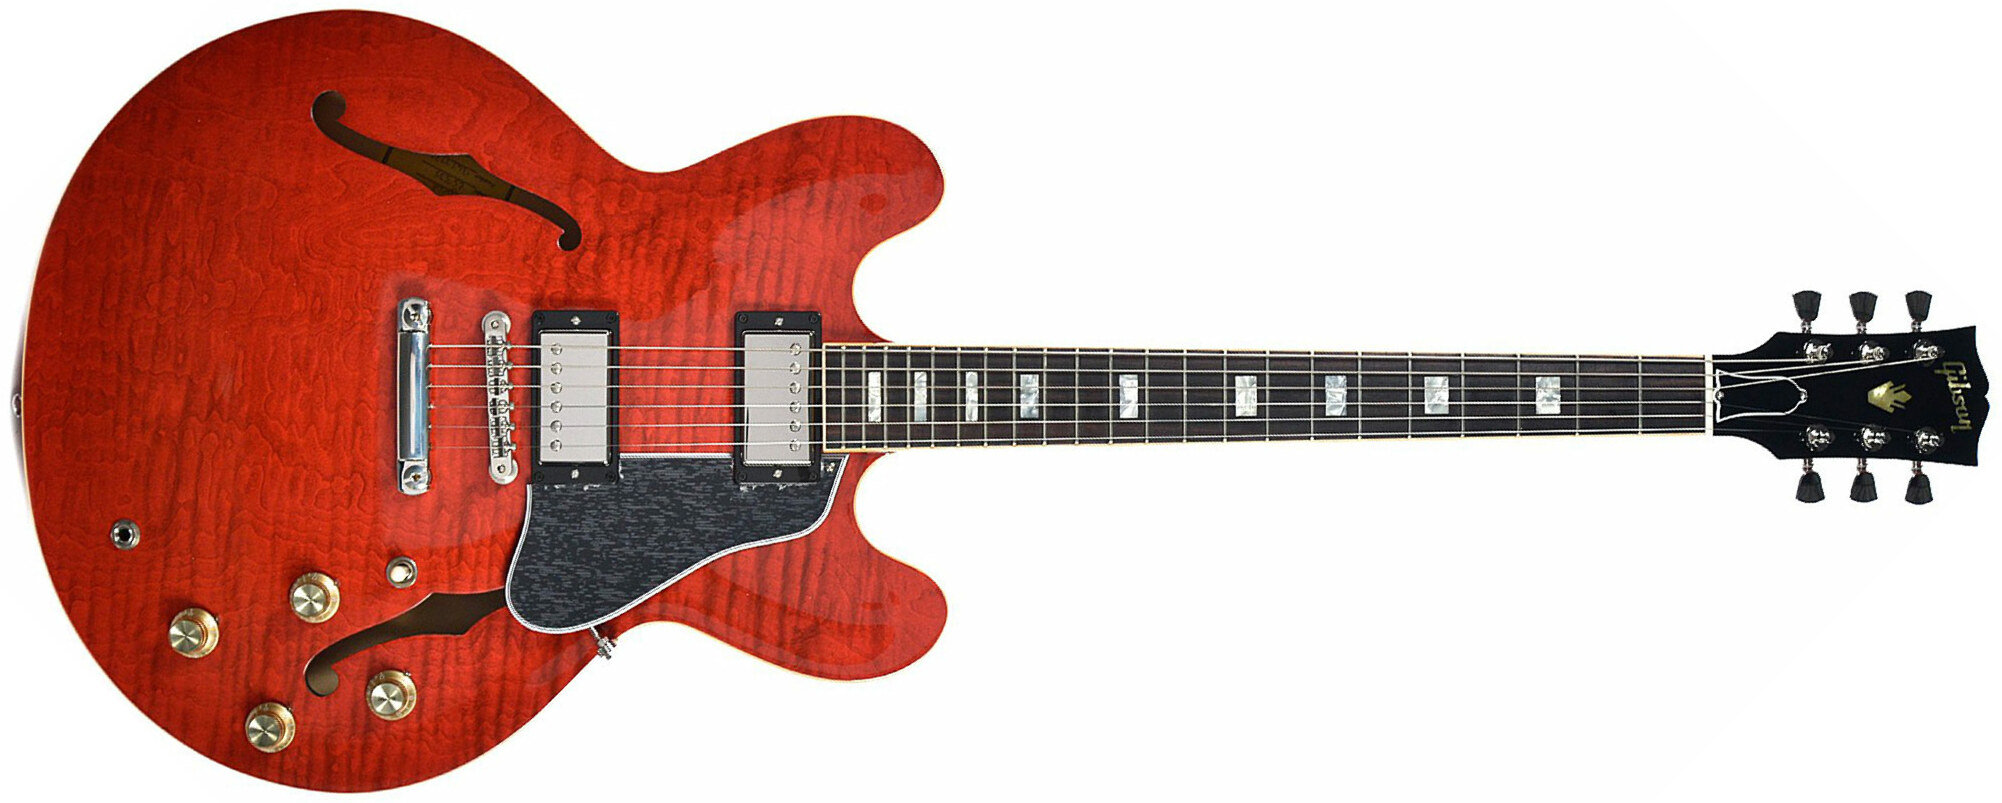 Gibson Es-335 Figured 2018 Ltd - Antique Sixties Cherry - Semi hollow elektriche gitaar - Main picture